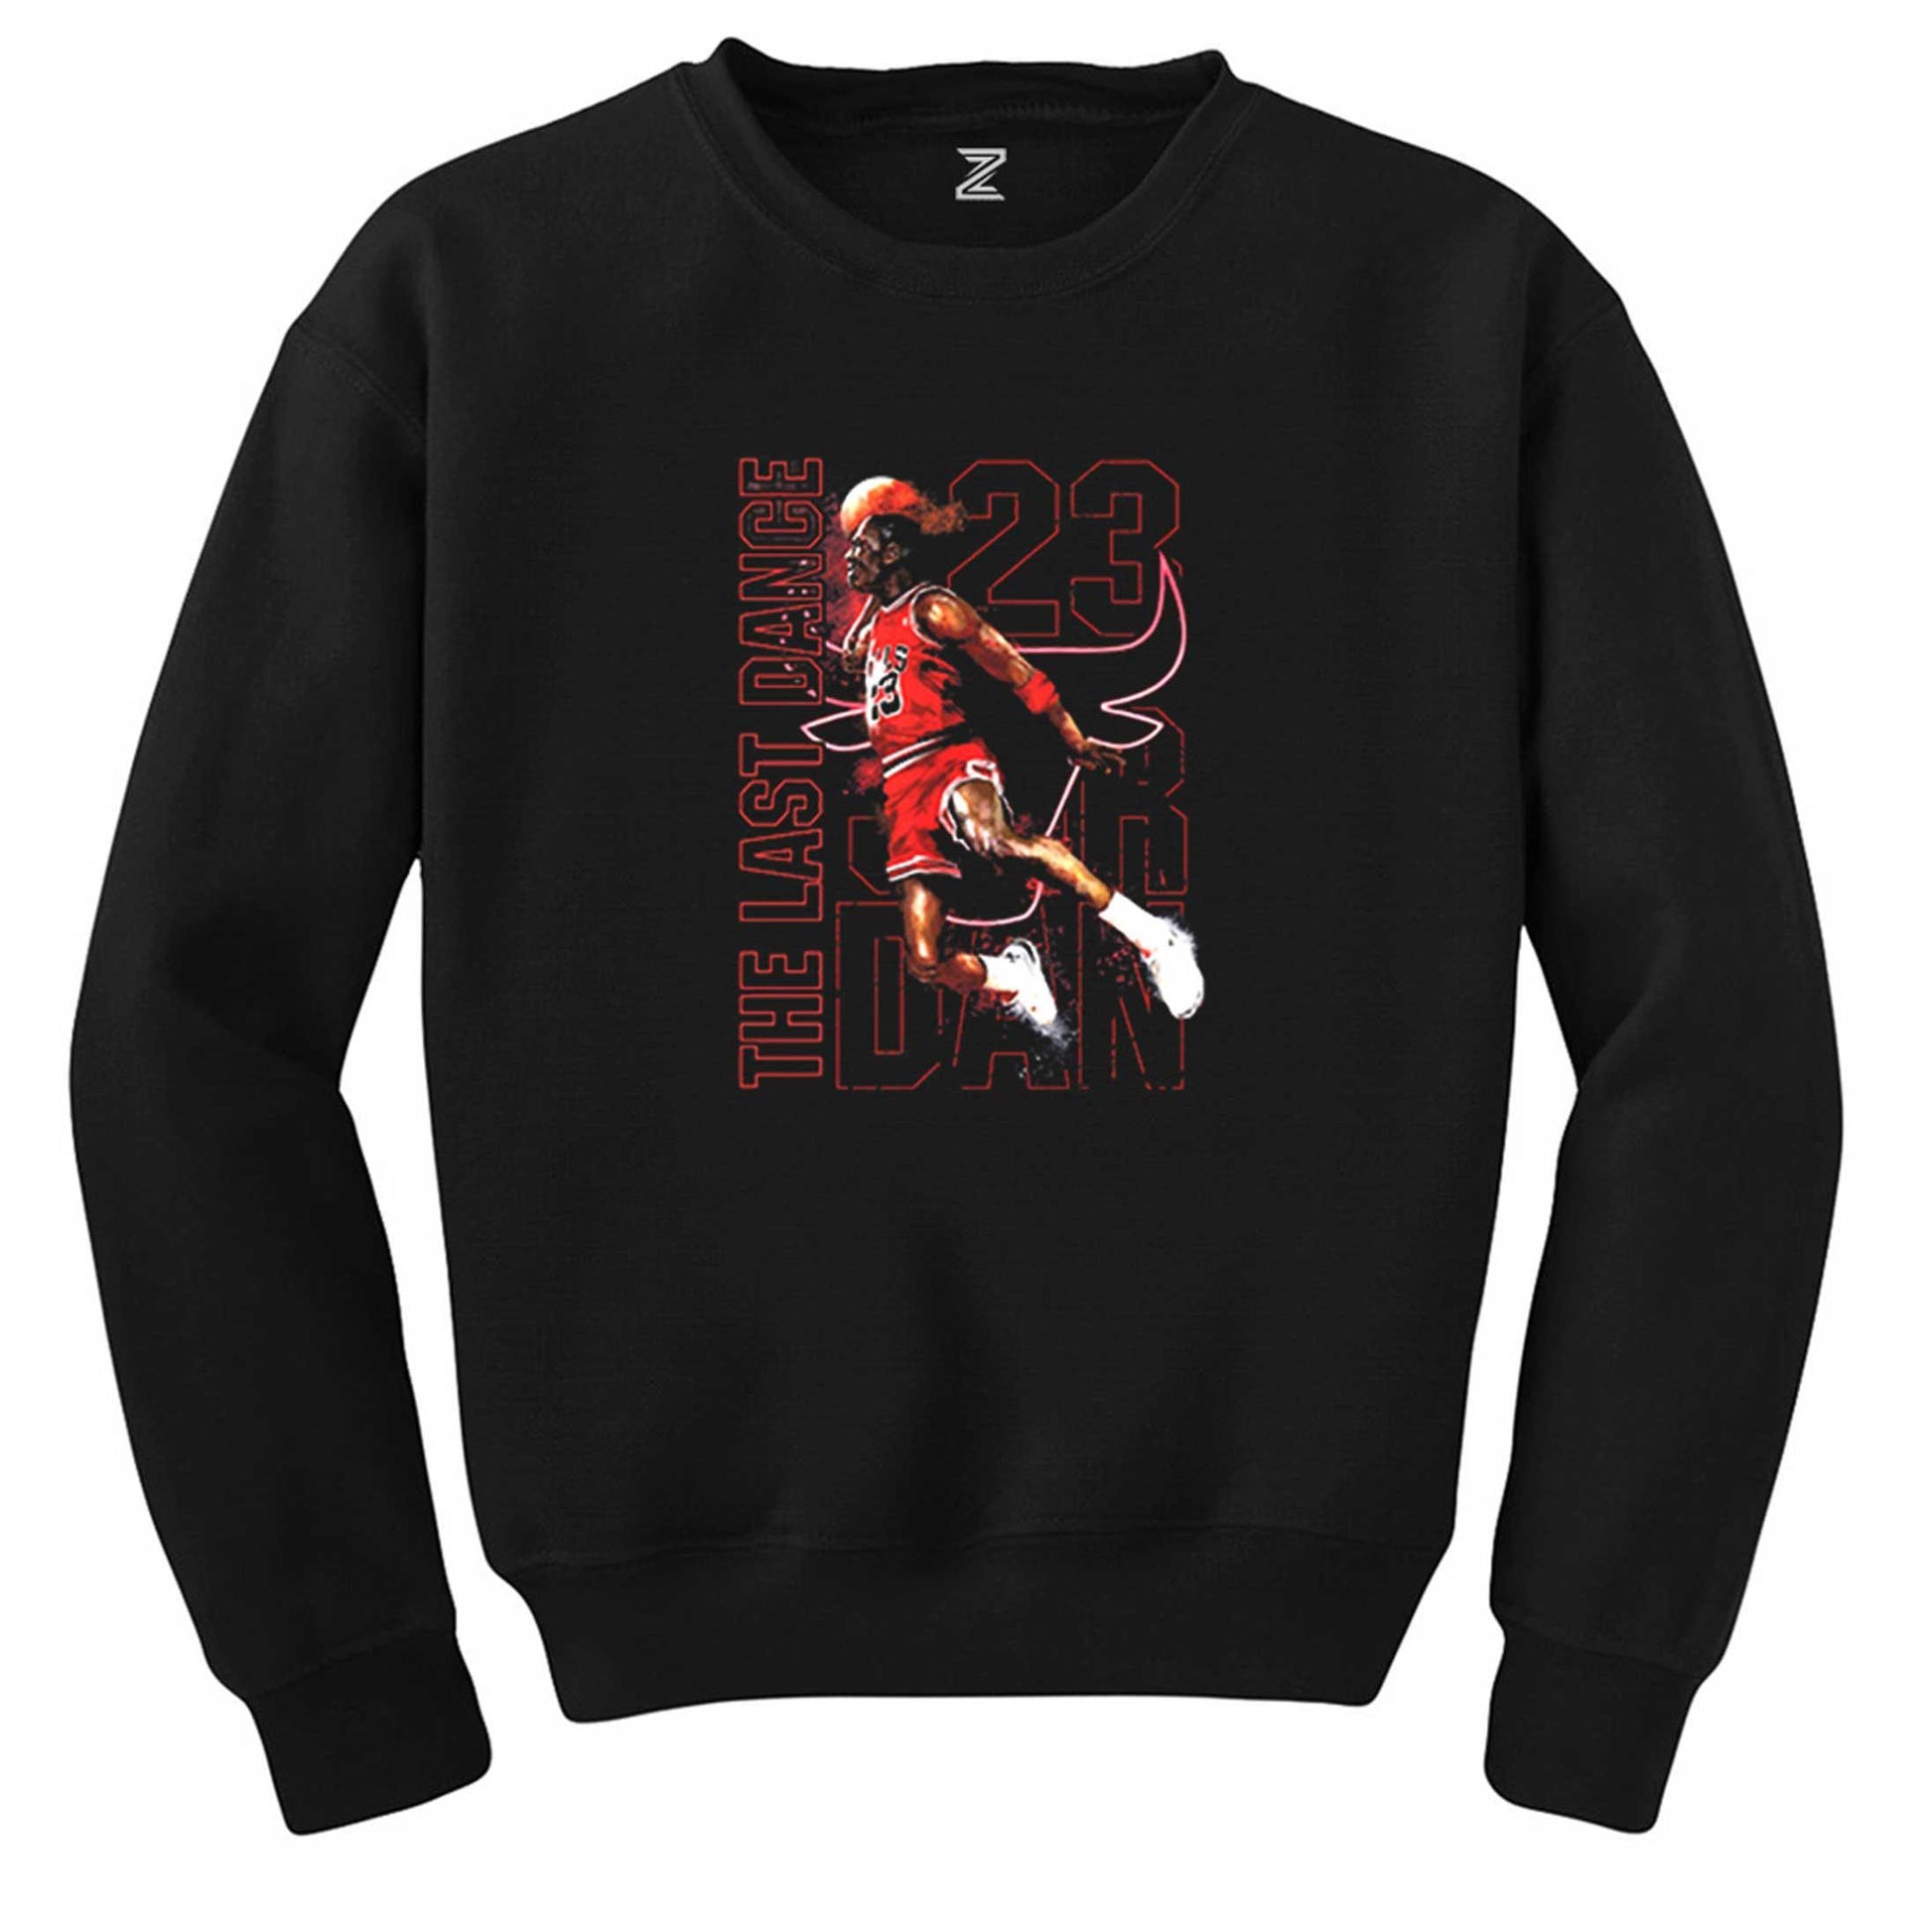 Chicago Bulls The last Dance Siyah Sweatshirt - Zepplingiyim